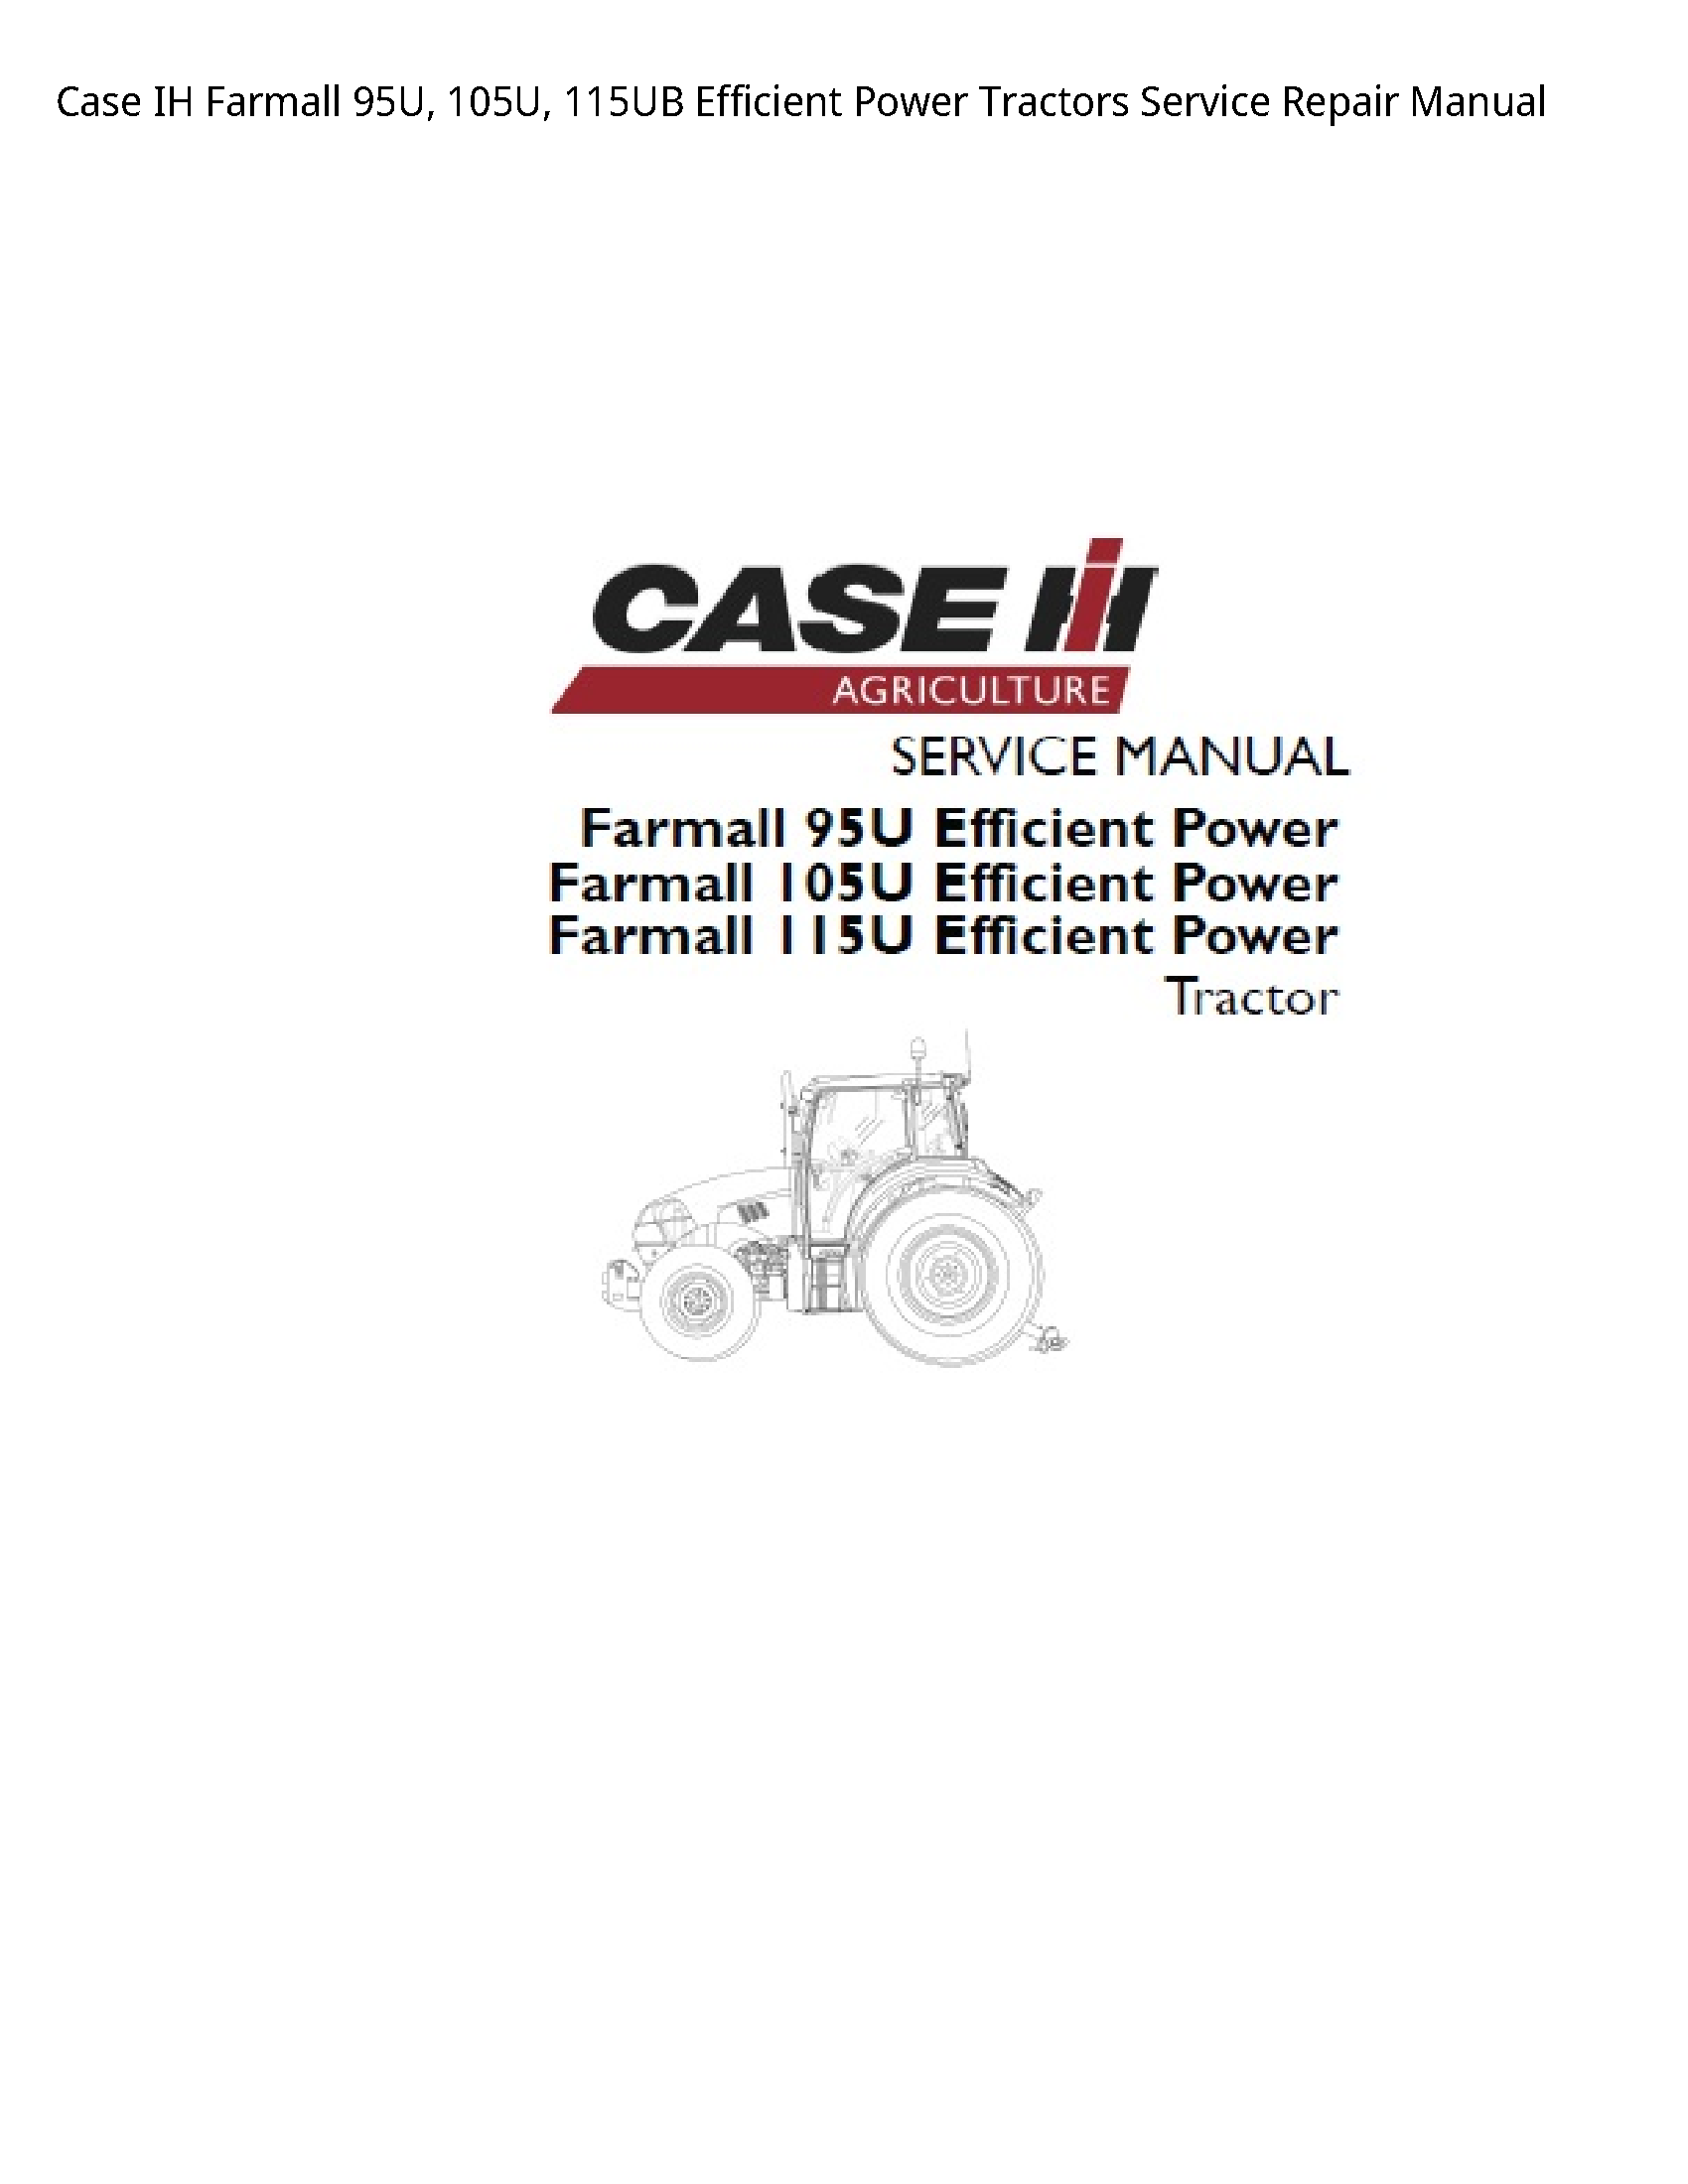 Case/Case IH 95U IH Farmall Efficient Power Tractors manual